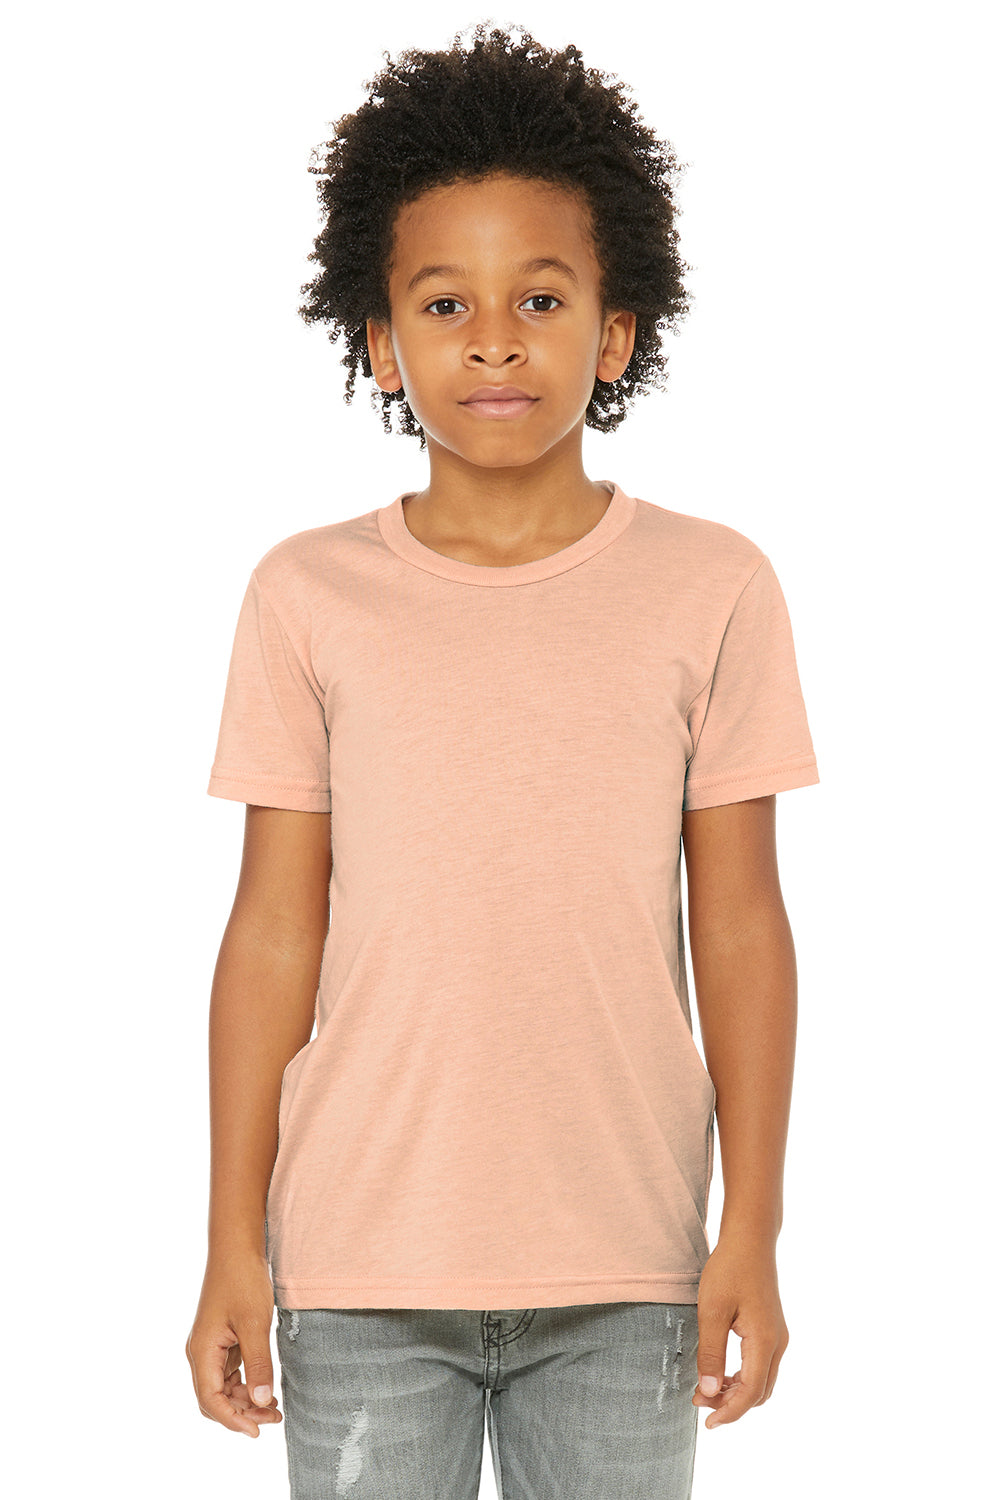 Bella + Canvas 3413Y Youth Short Sleeve Crewneck T-Shirt Peach Model Front